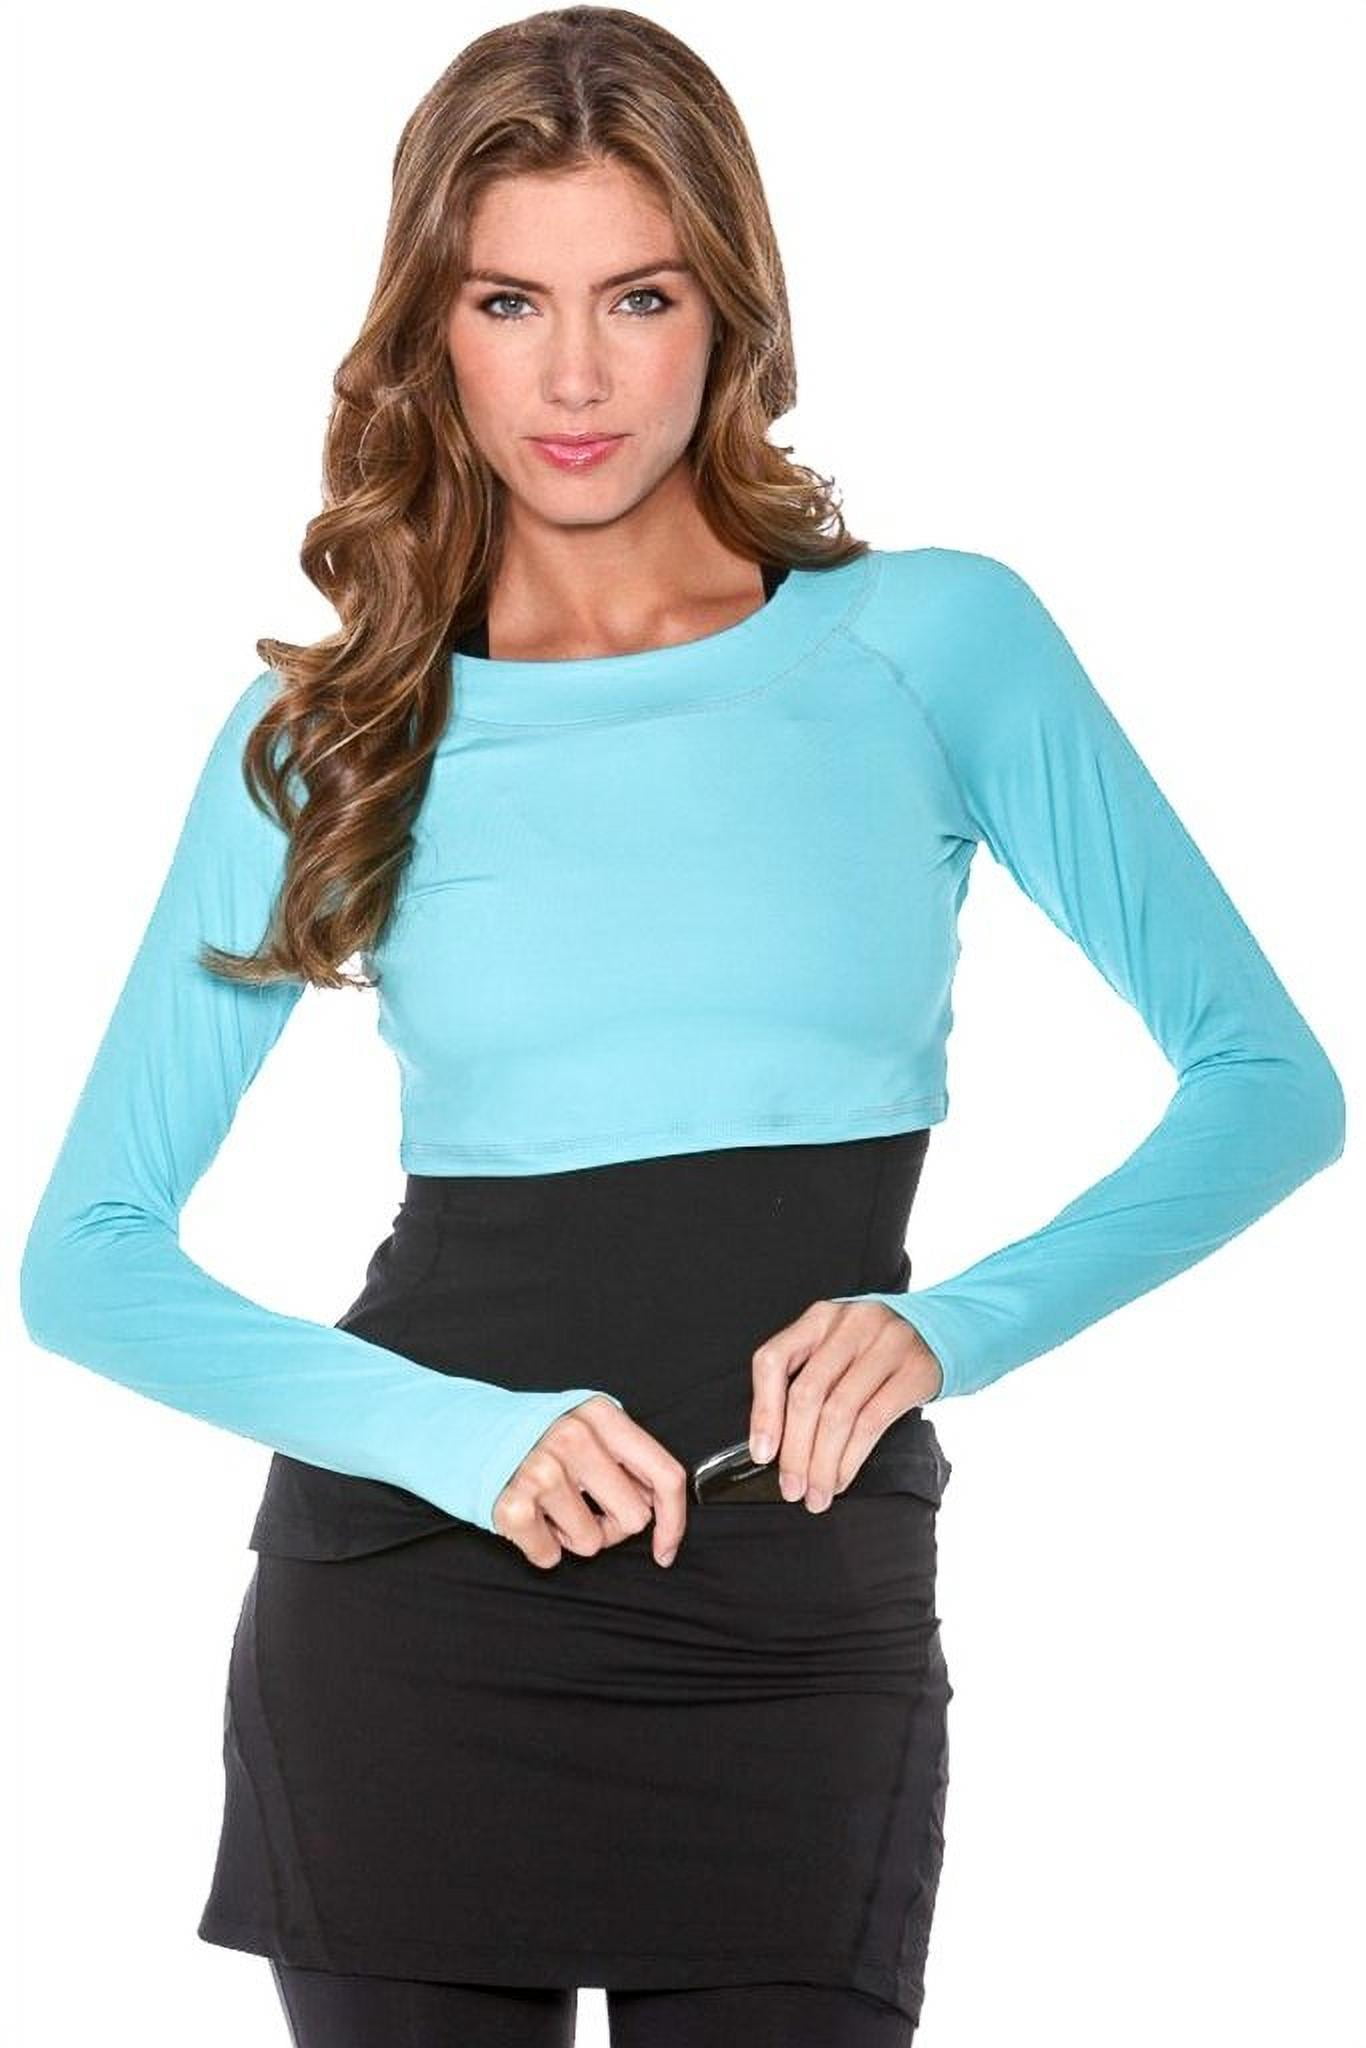 BloqUV Women's Crop (Light Turquoise, Small) - Walmart.com